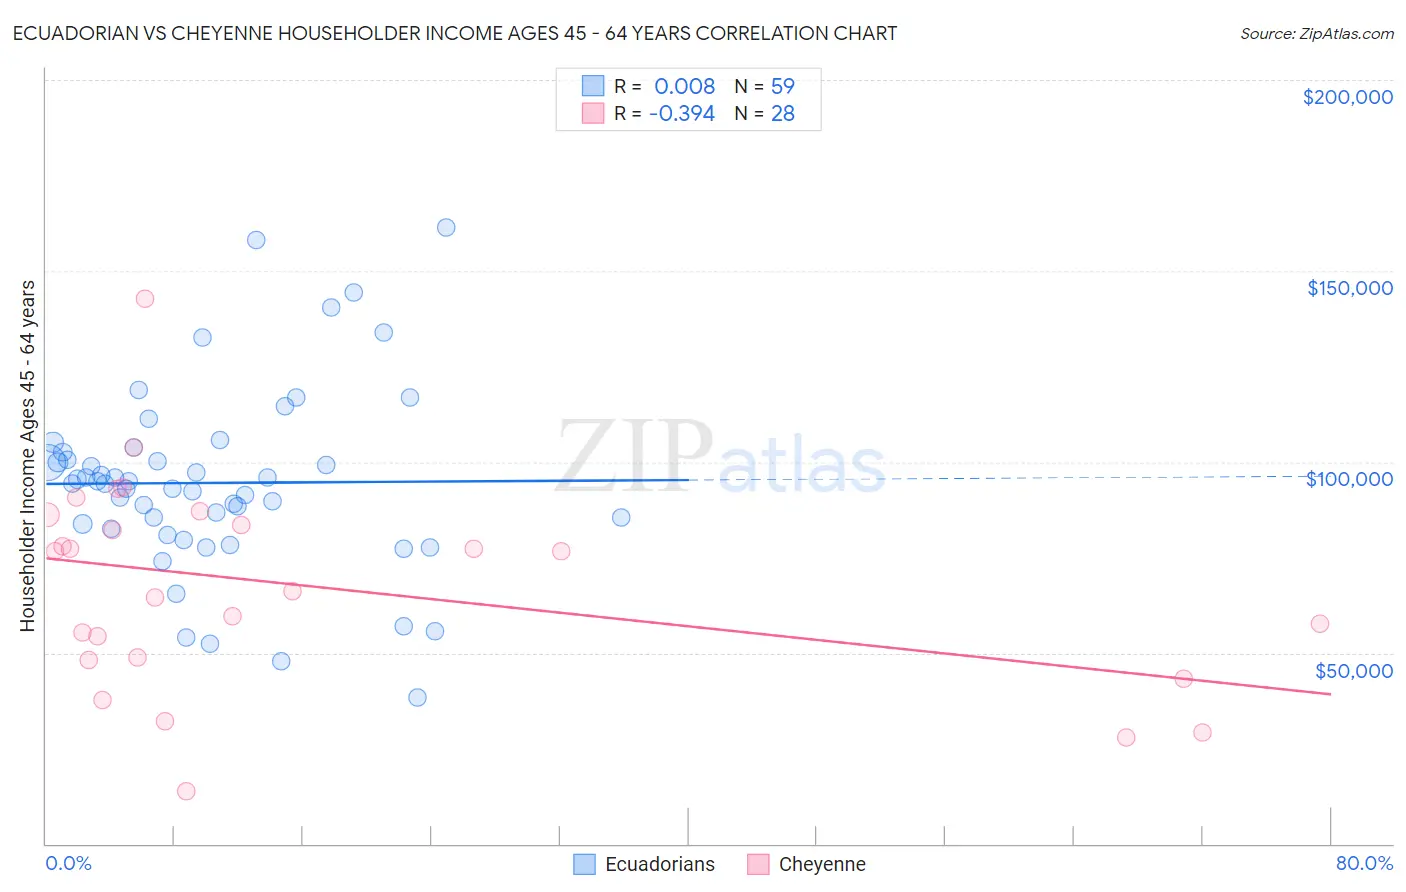 Ecuadorian vs Cheyenne Householder Income Ages 45 - 64 years